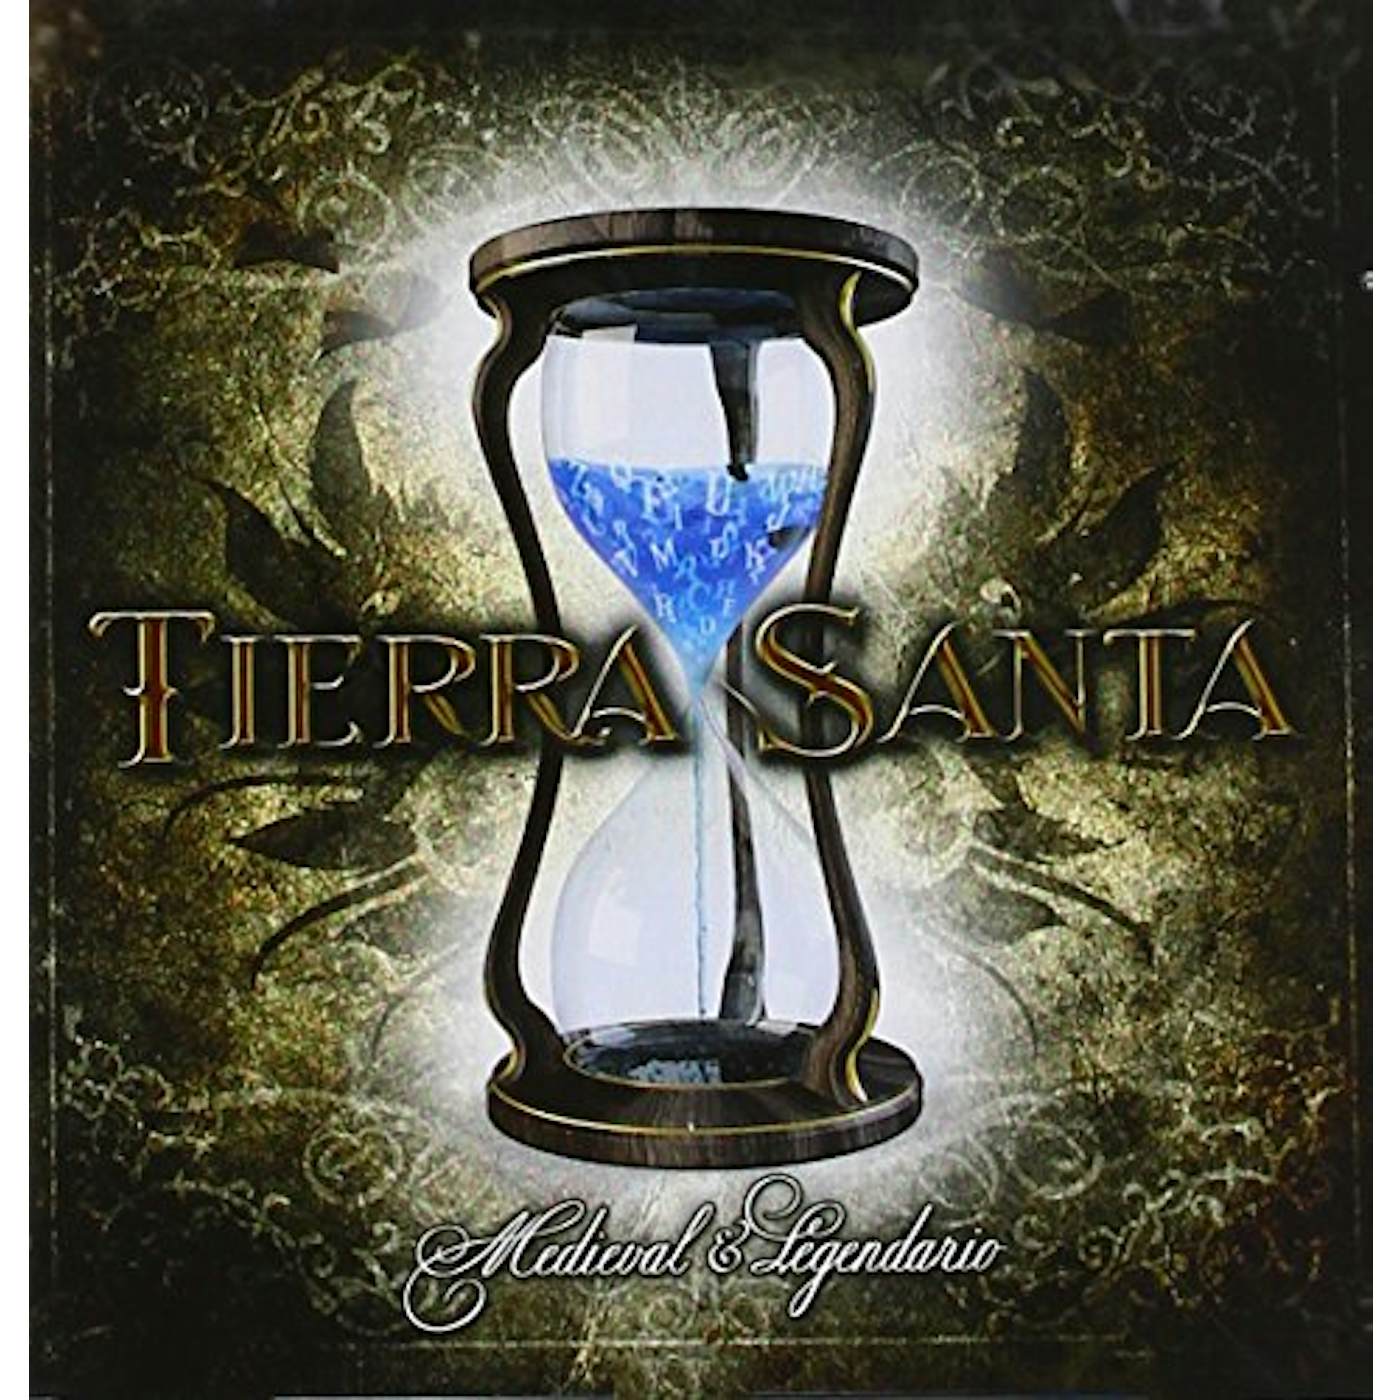 Tierra Santa MEDIEVAL & LEGENDARIO CD